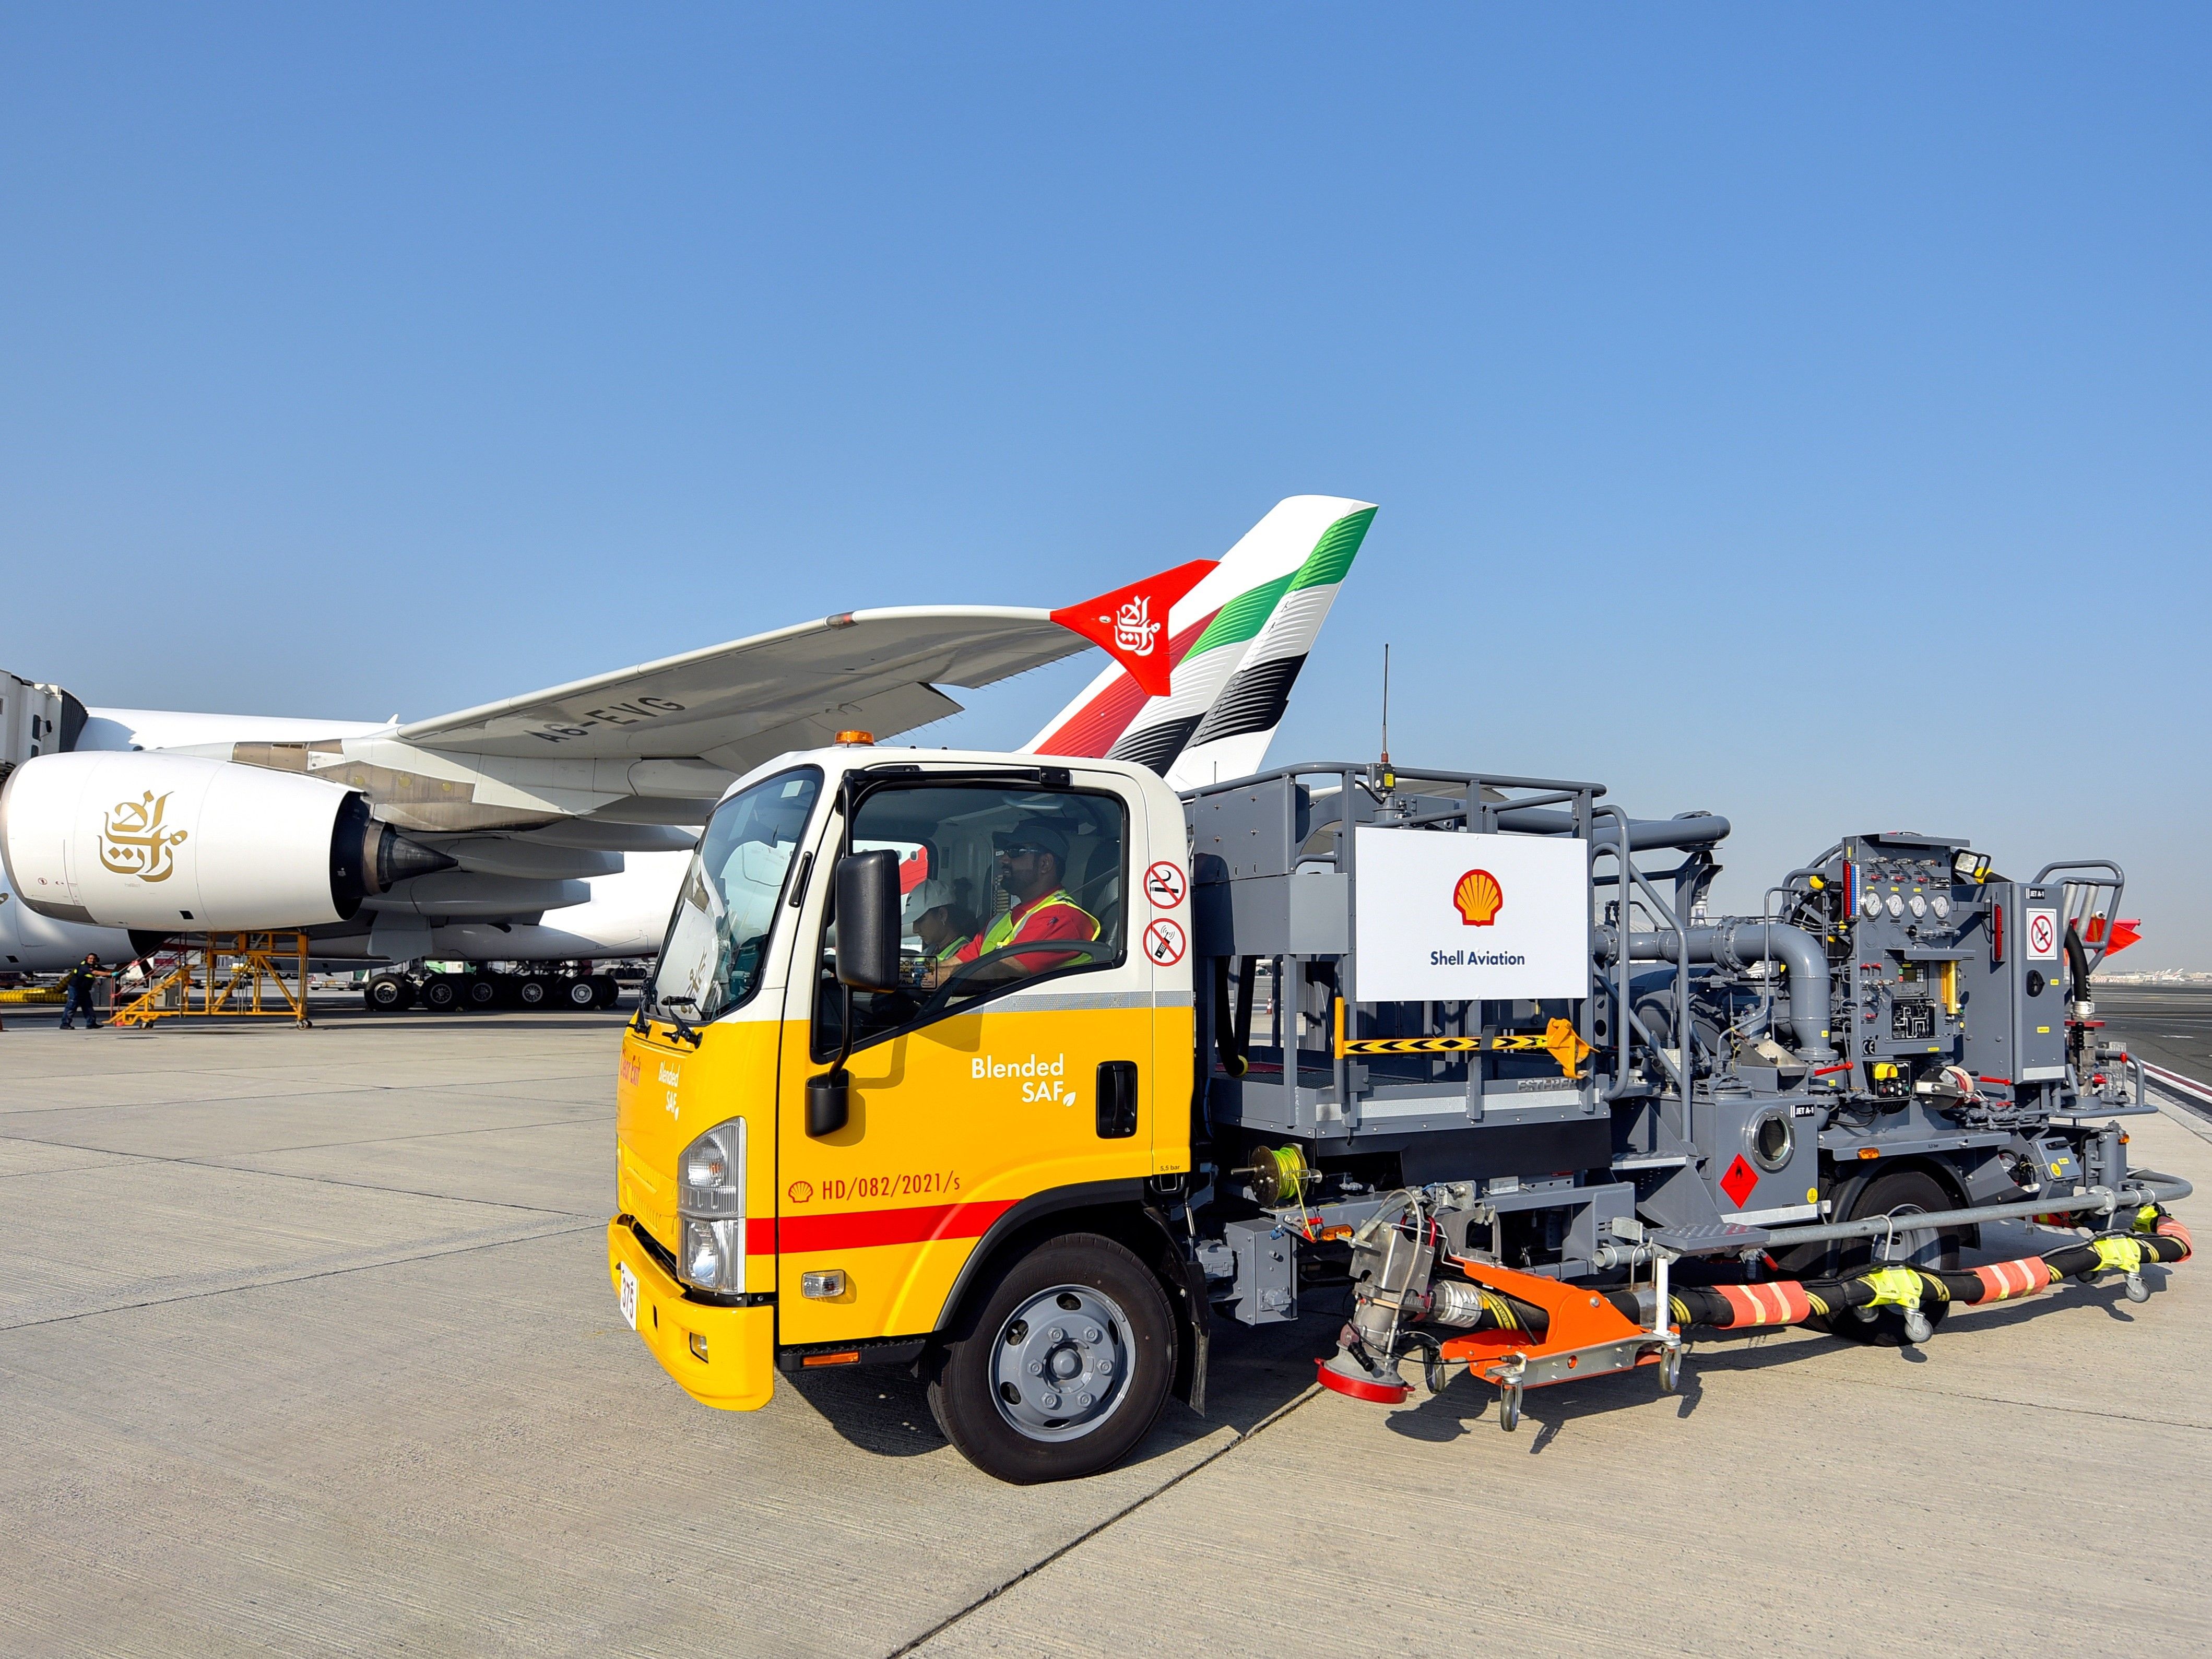 dsc-2399a - 16x9 - Shell Aviation SAF Fuel Truck on Dubai Tarmac with Emirates A380